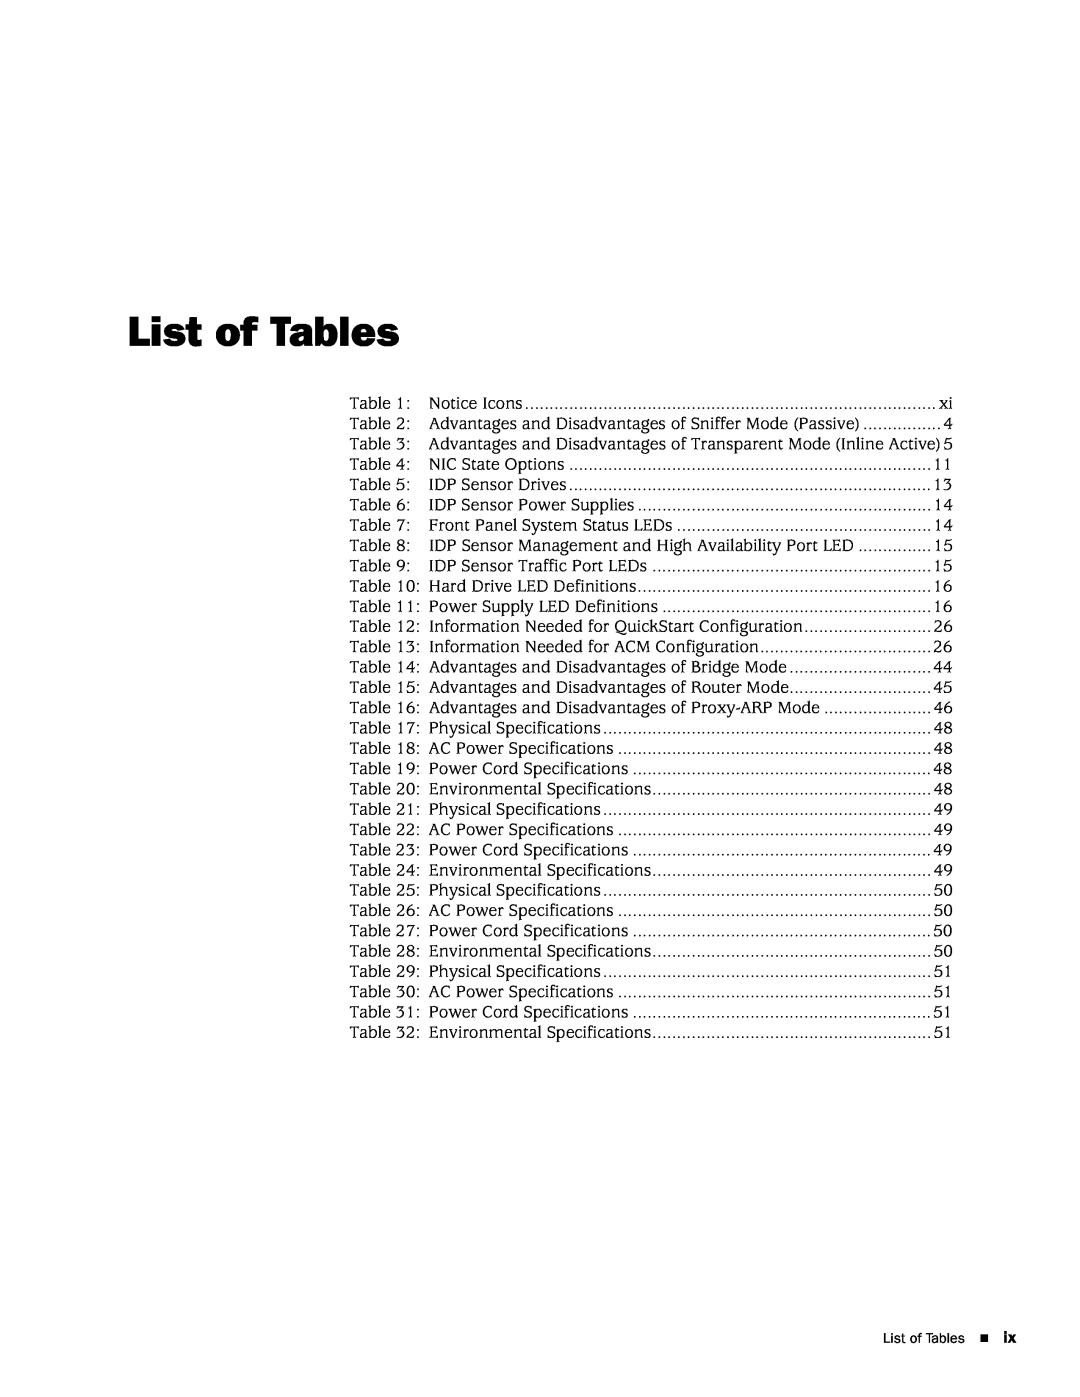 Juniper Networks IDP8200, IDP250, IDP 800, IDP75 manual List of Tables 